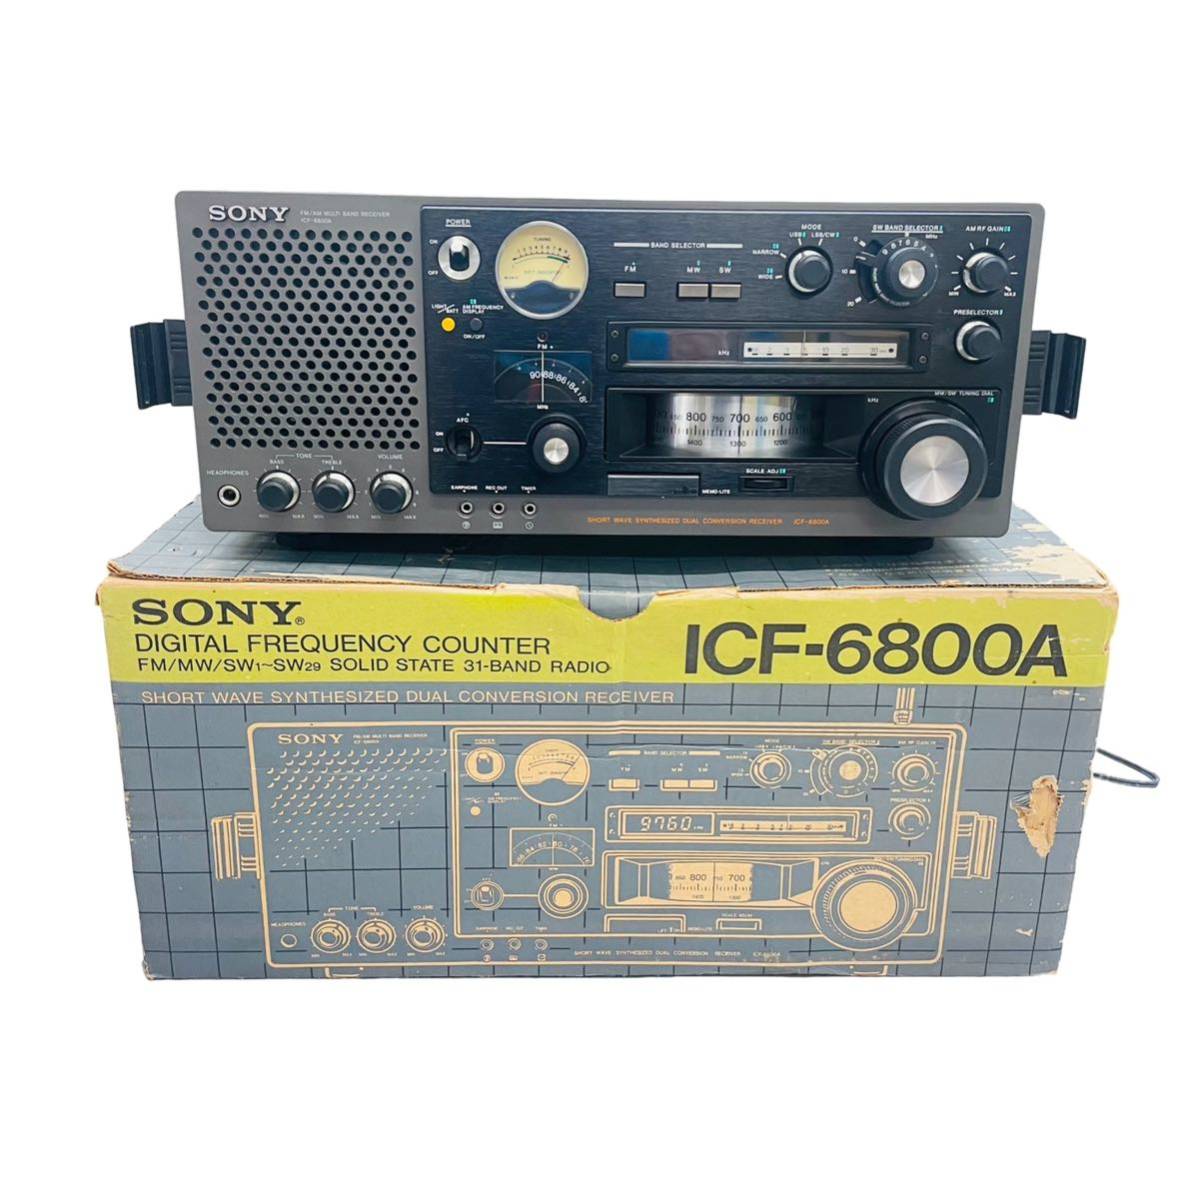 B6-04)SONY Sony ICF-6800A FM/MW/SW 31 band multiband receiver radio original box attaching present condition goods 